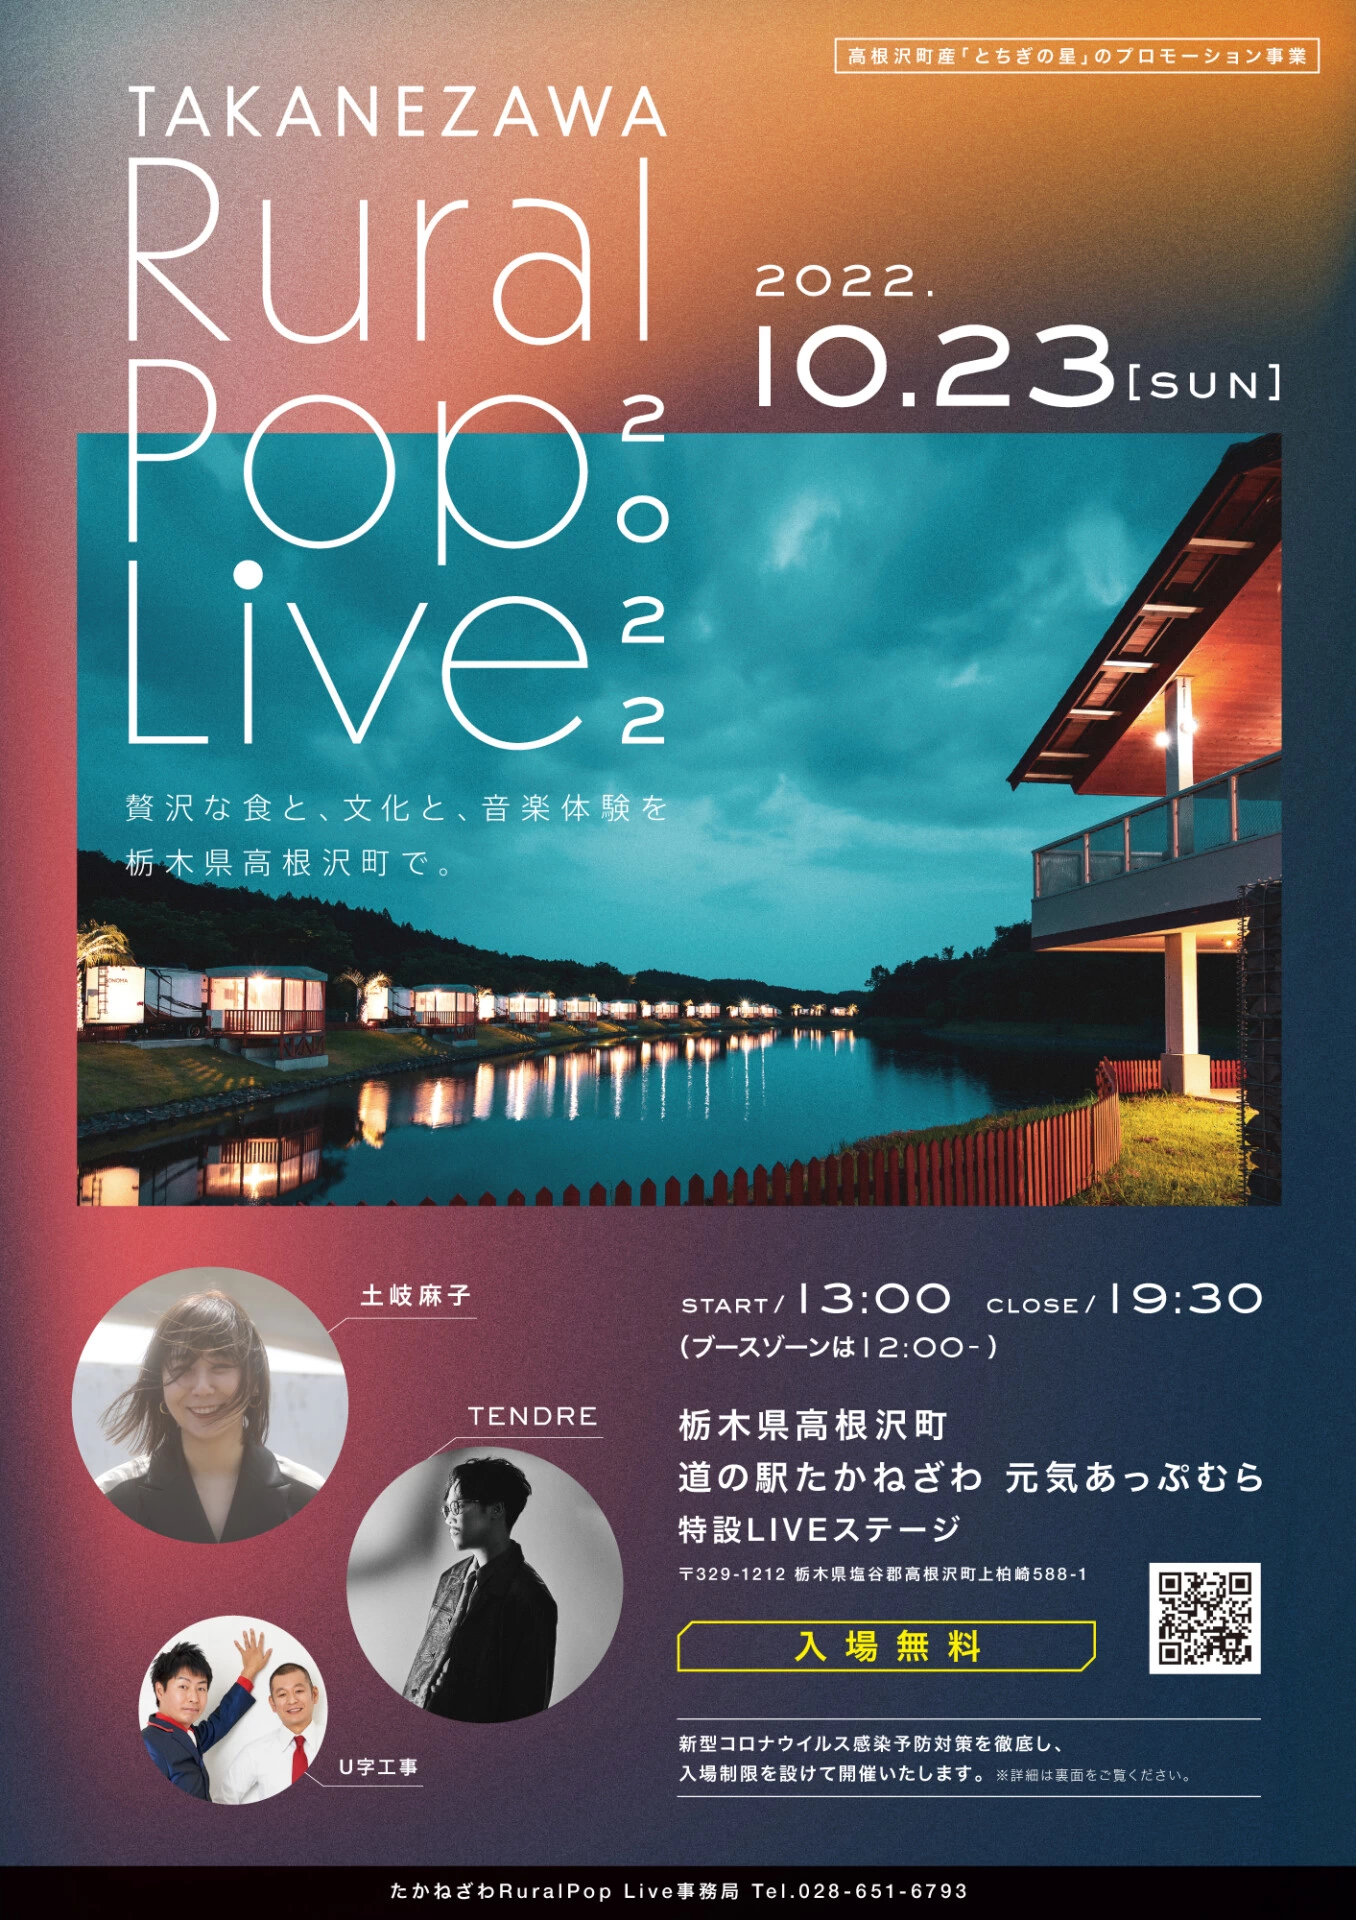 TAKANEZAWA RuralPop Live 2022